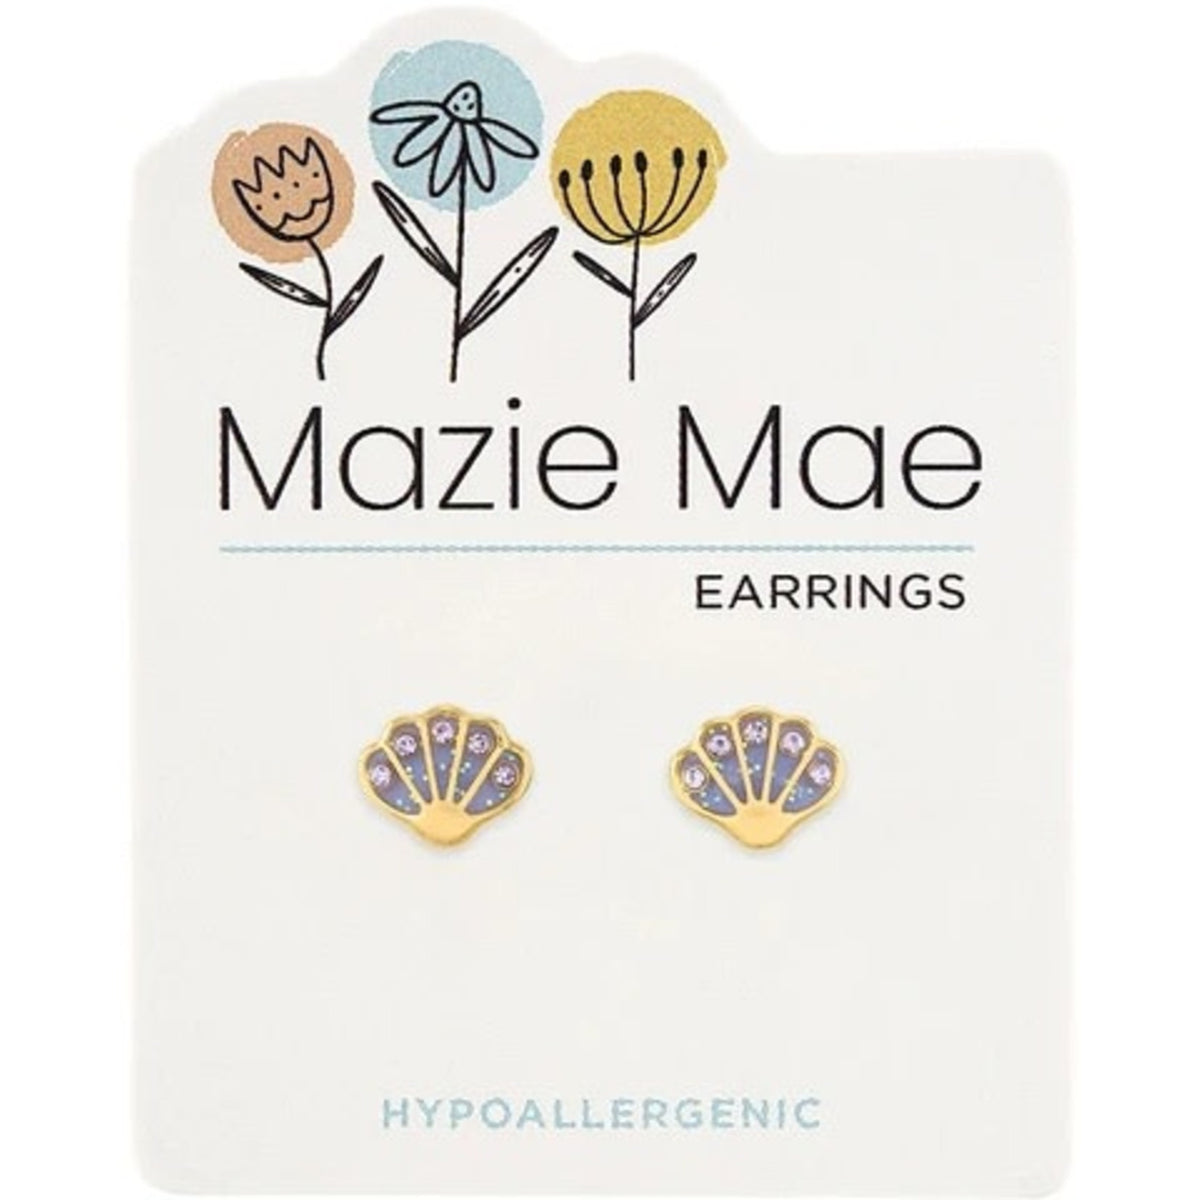 Mazie Mae Stud Earrings